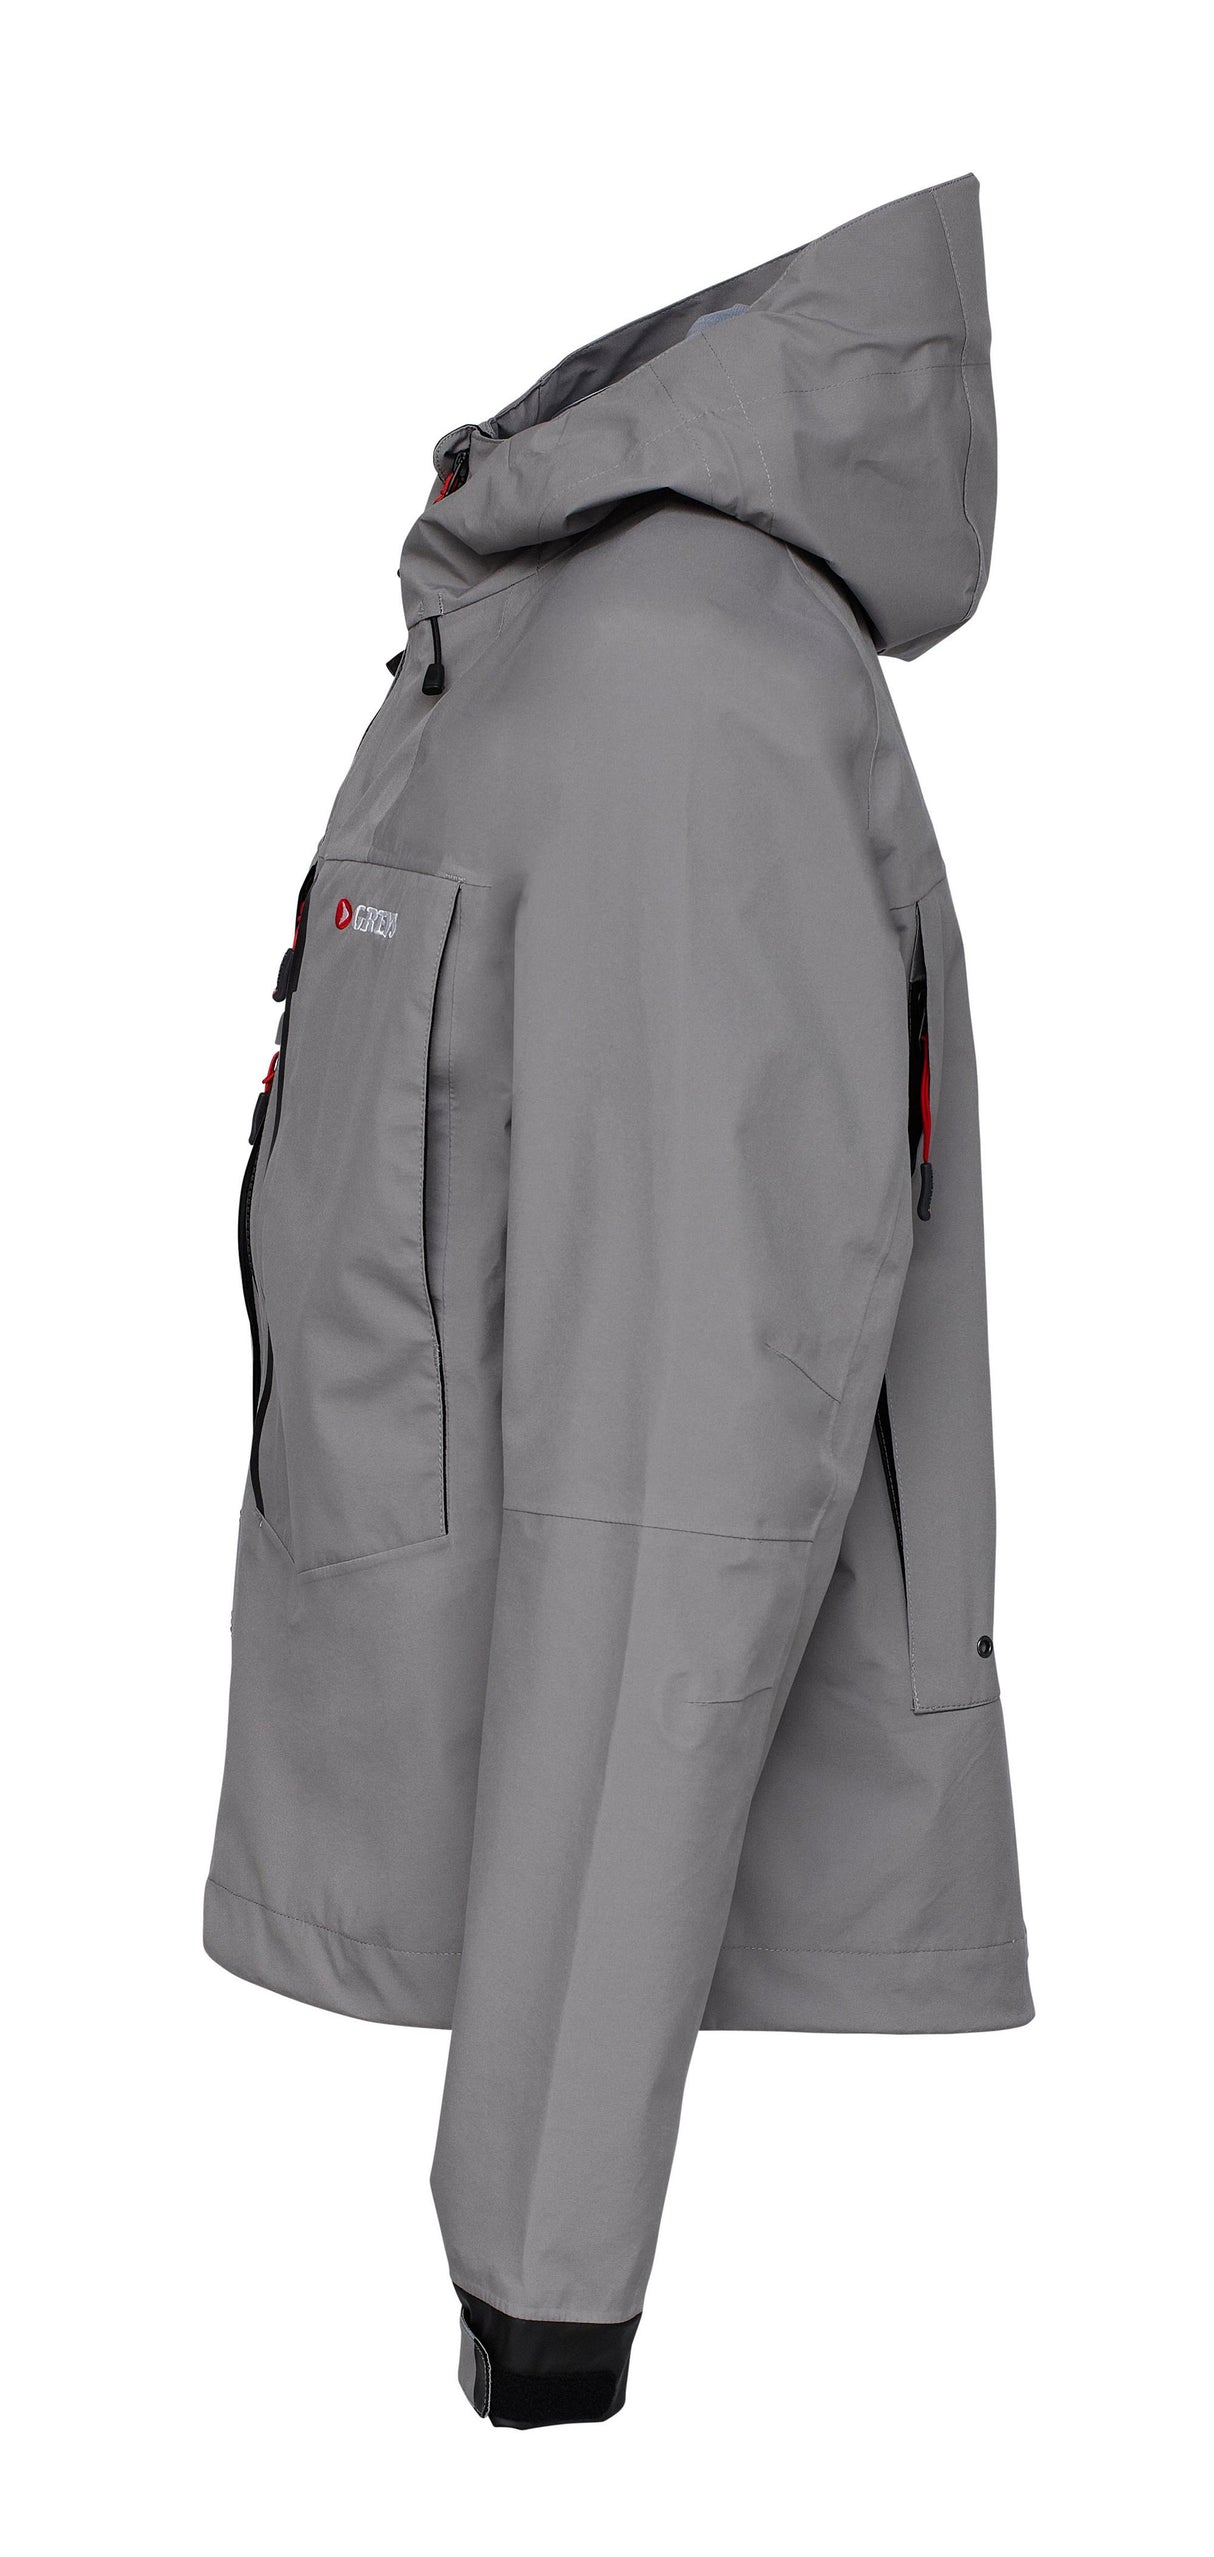 Greys Tail Wading Jacket